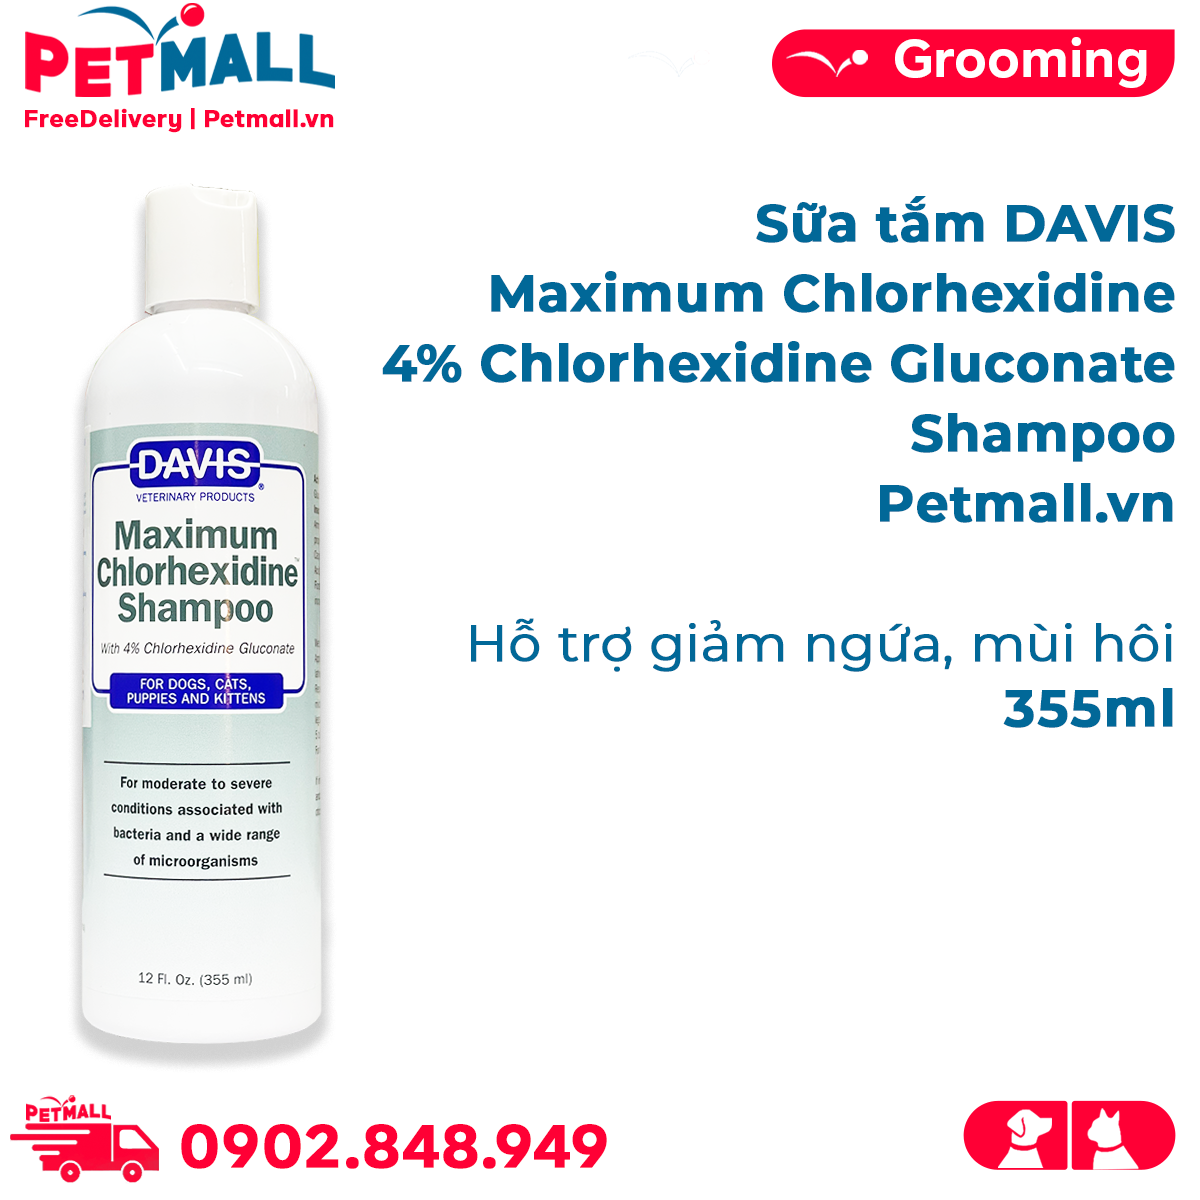 Sữa tắm DAVIS Maximum Chlorhexidine with 4% Chlorhexidine Gluconate